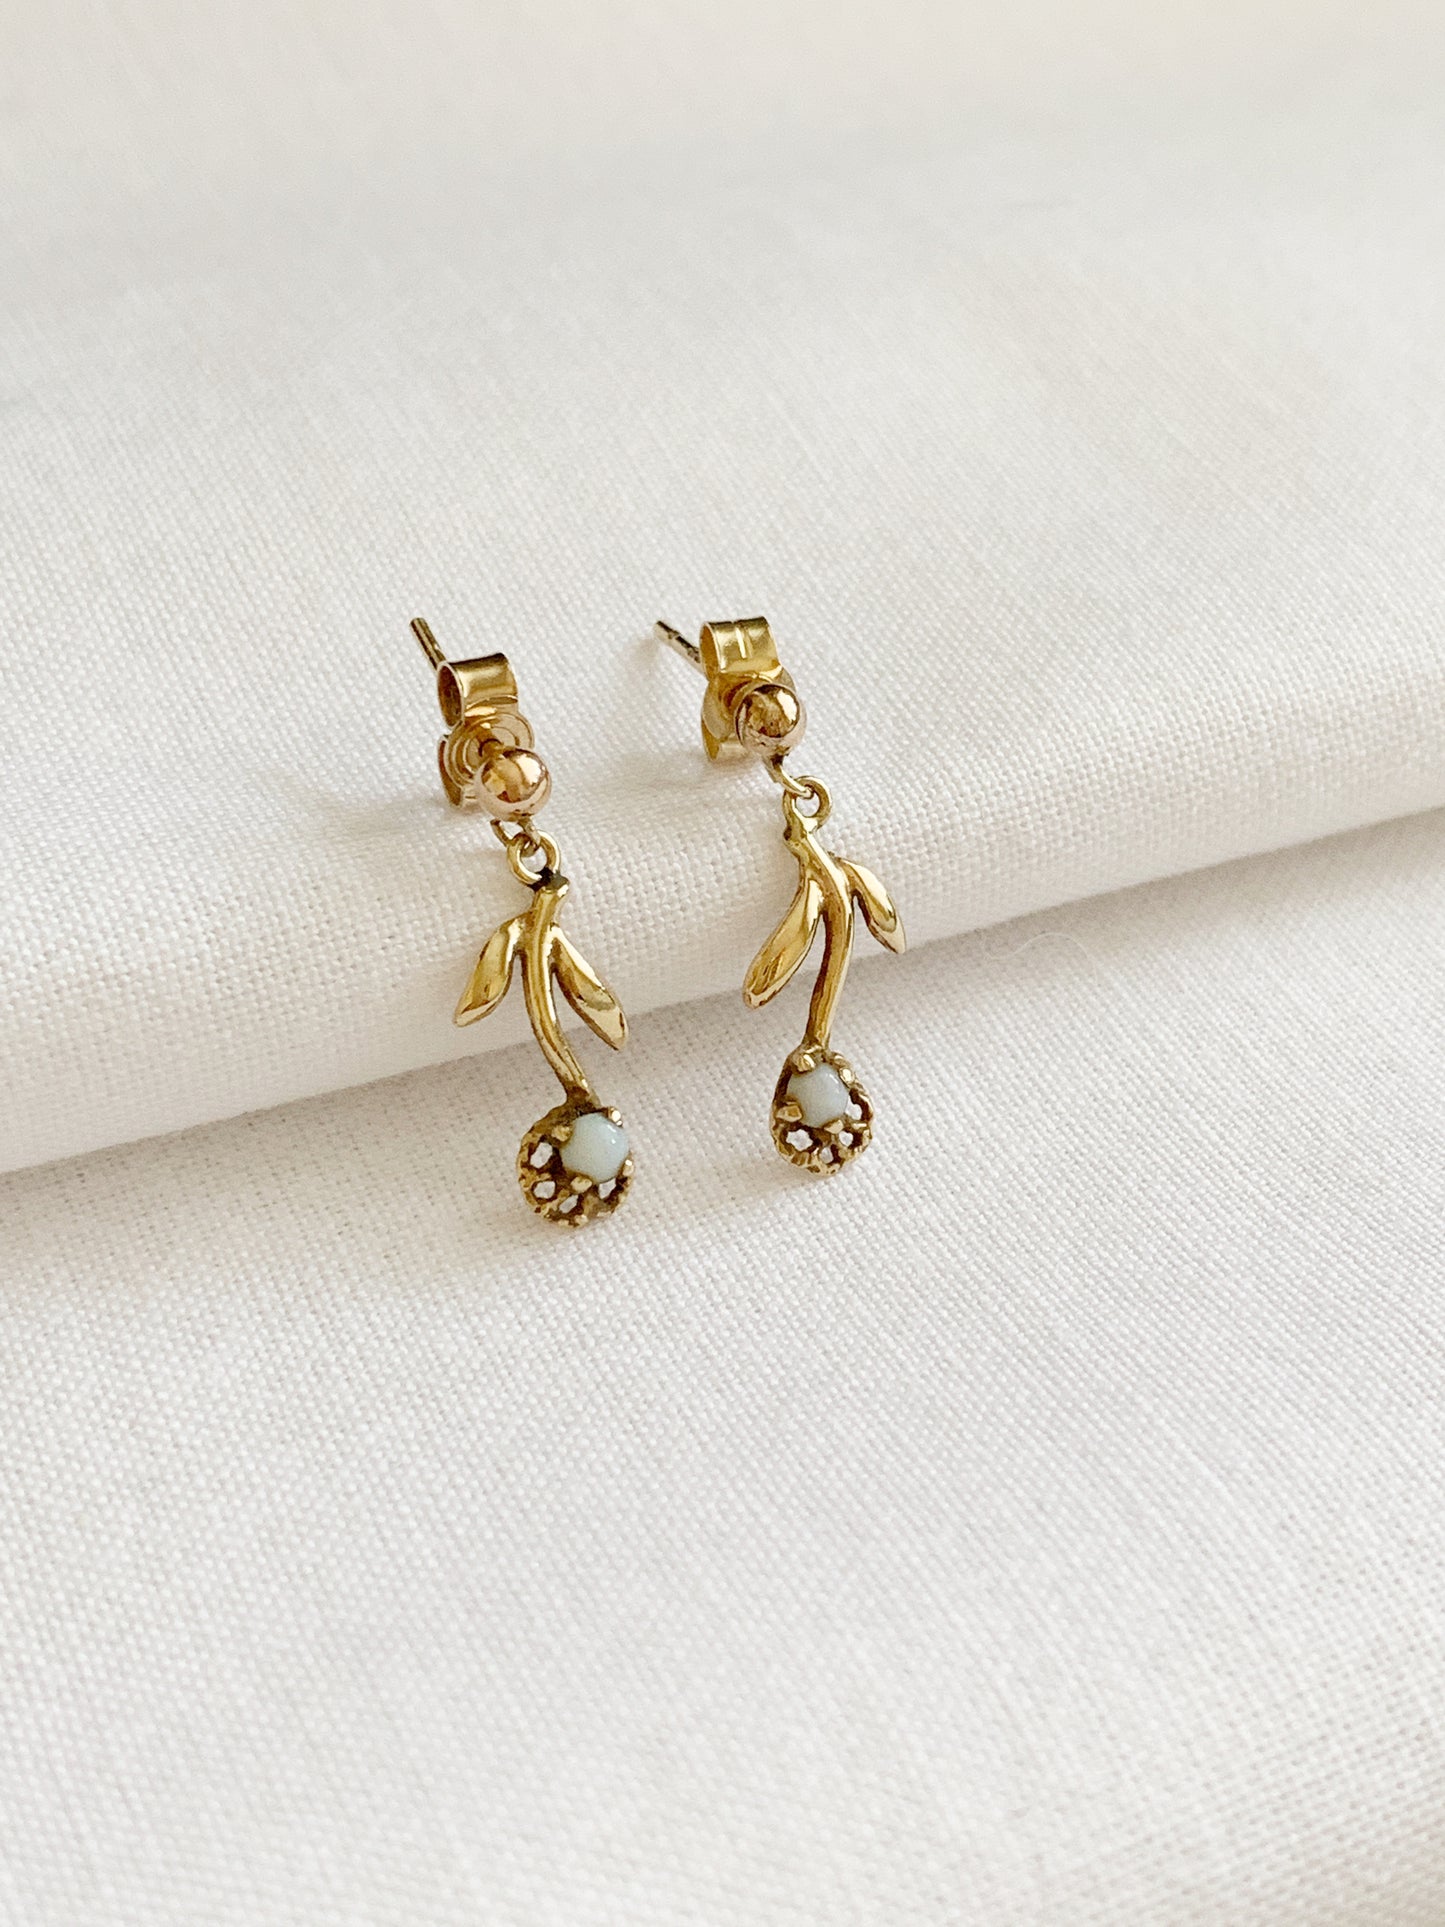 Vintage 9ct Gold Opal Flower Earrings